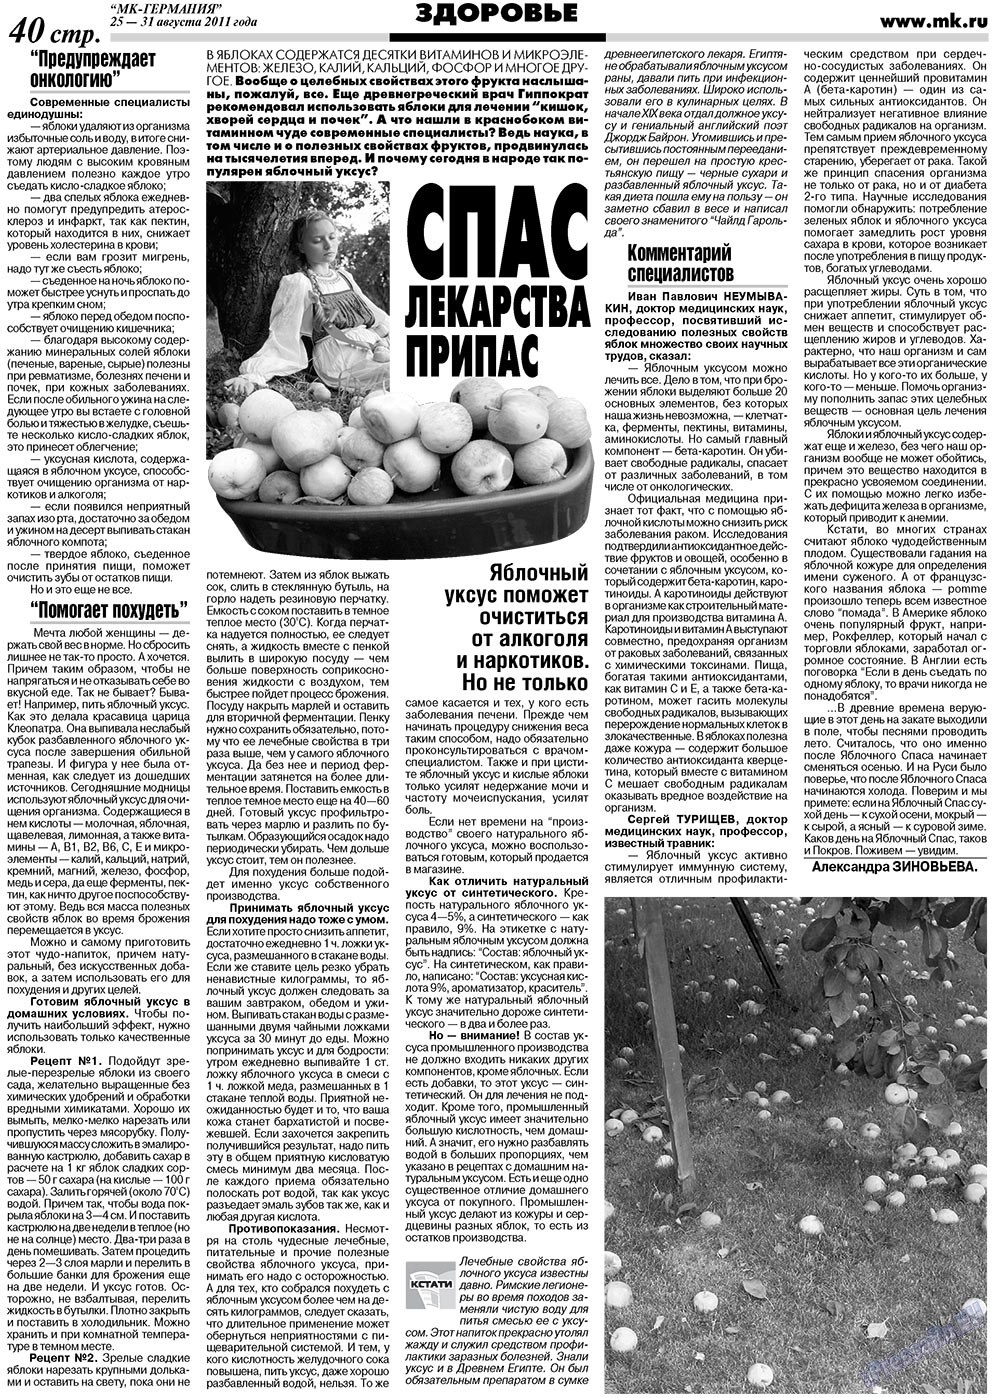 МК-Германия, газета. 2011 №34 стр.40